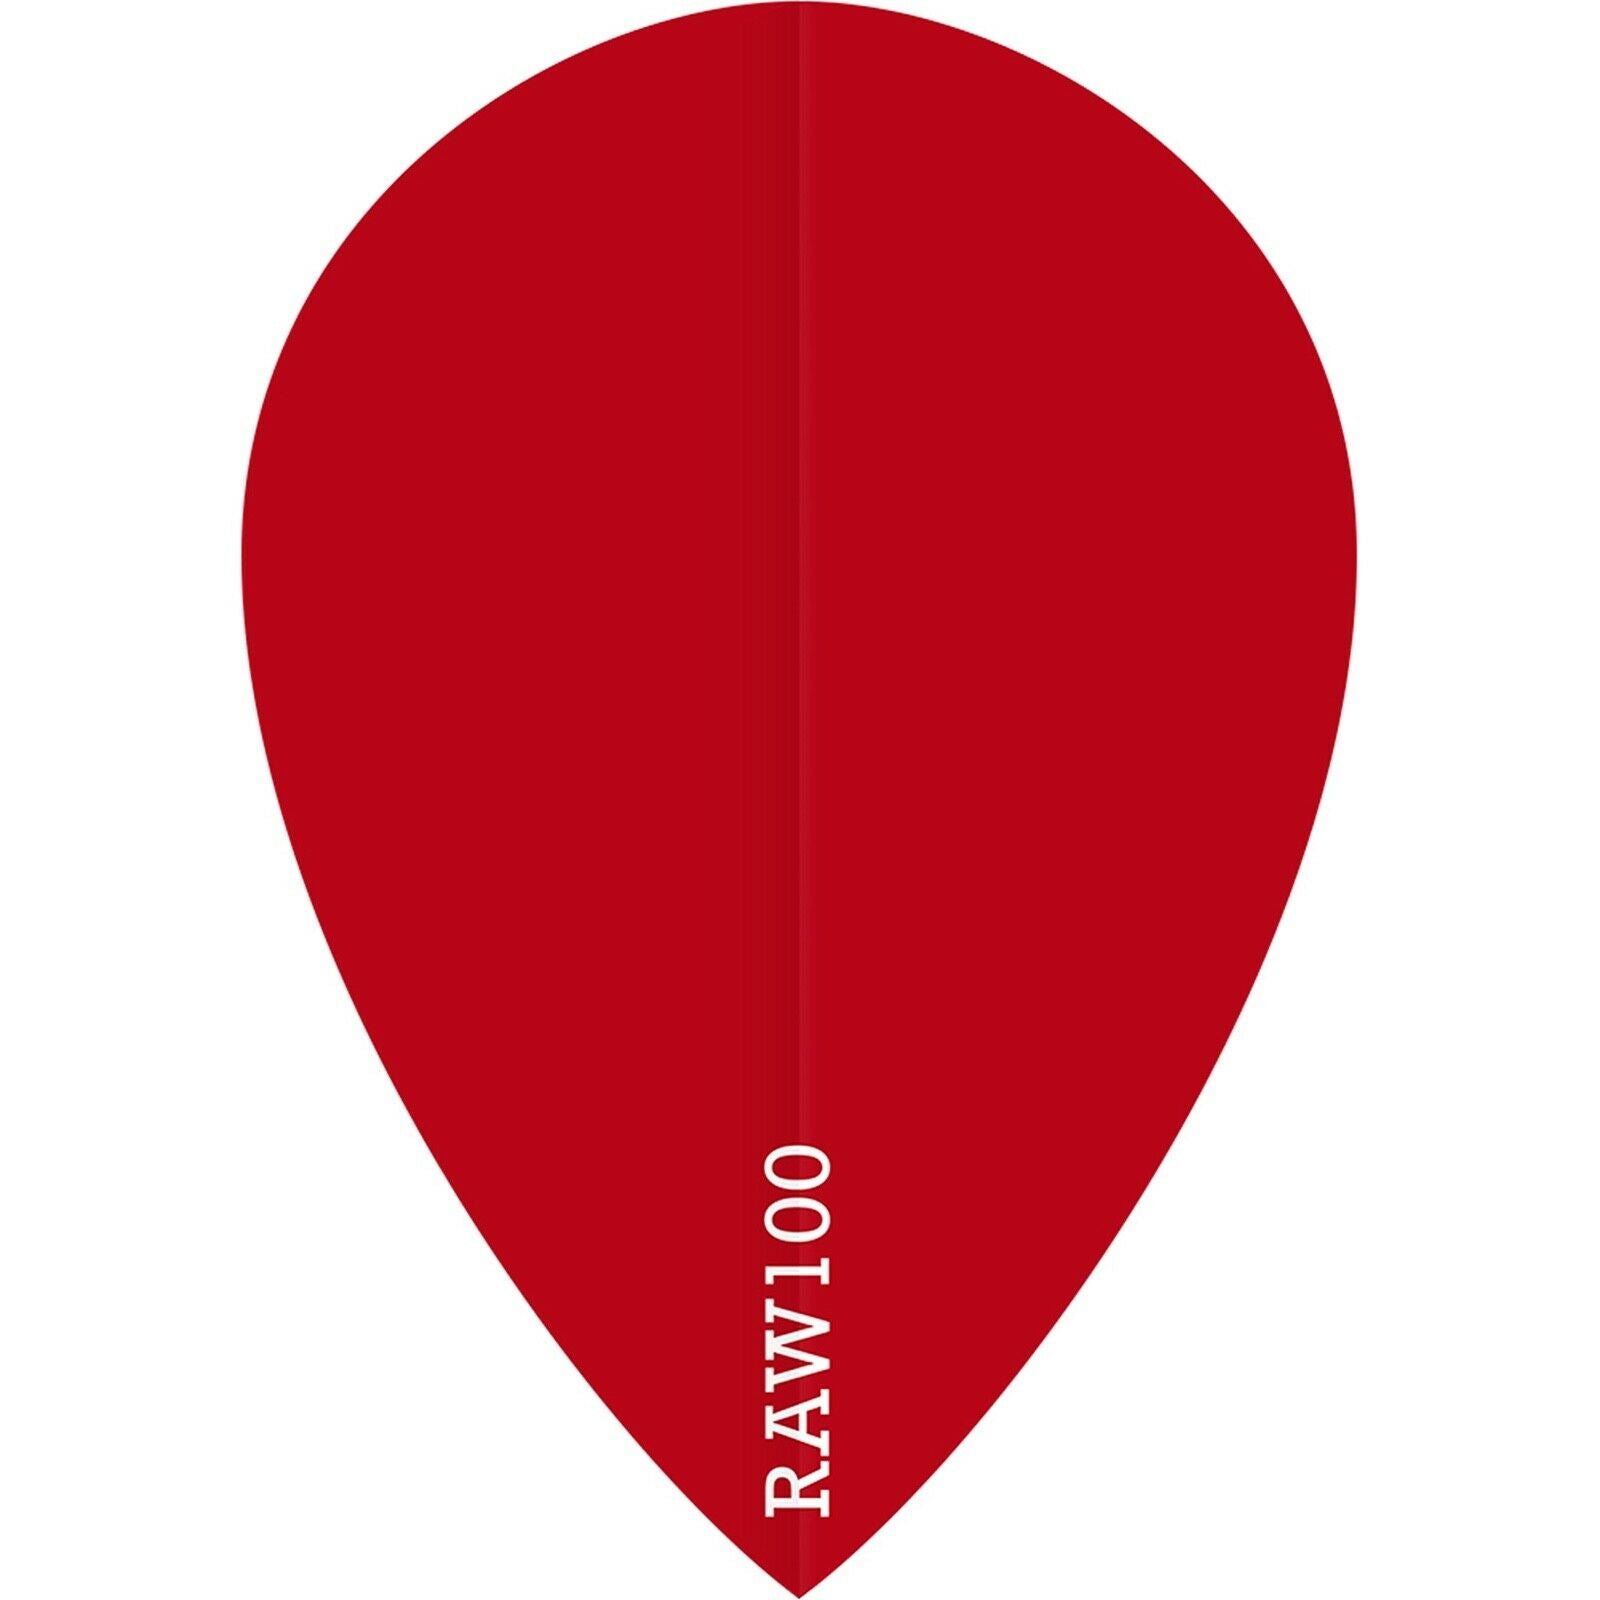 Raw 100 Plain Flights - Pear - 100 micron - Red